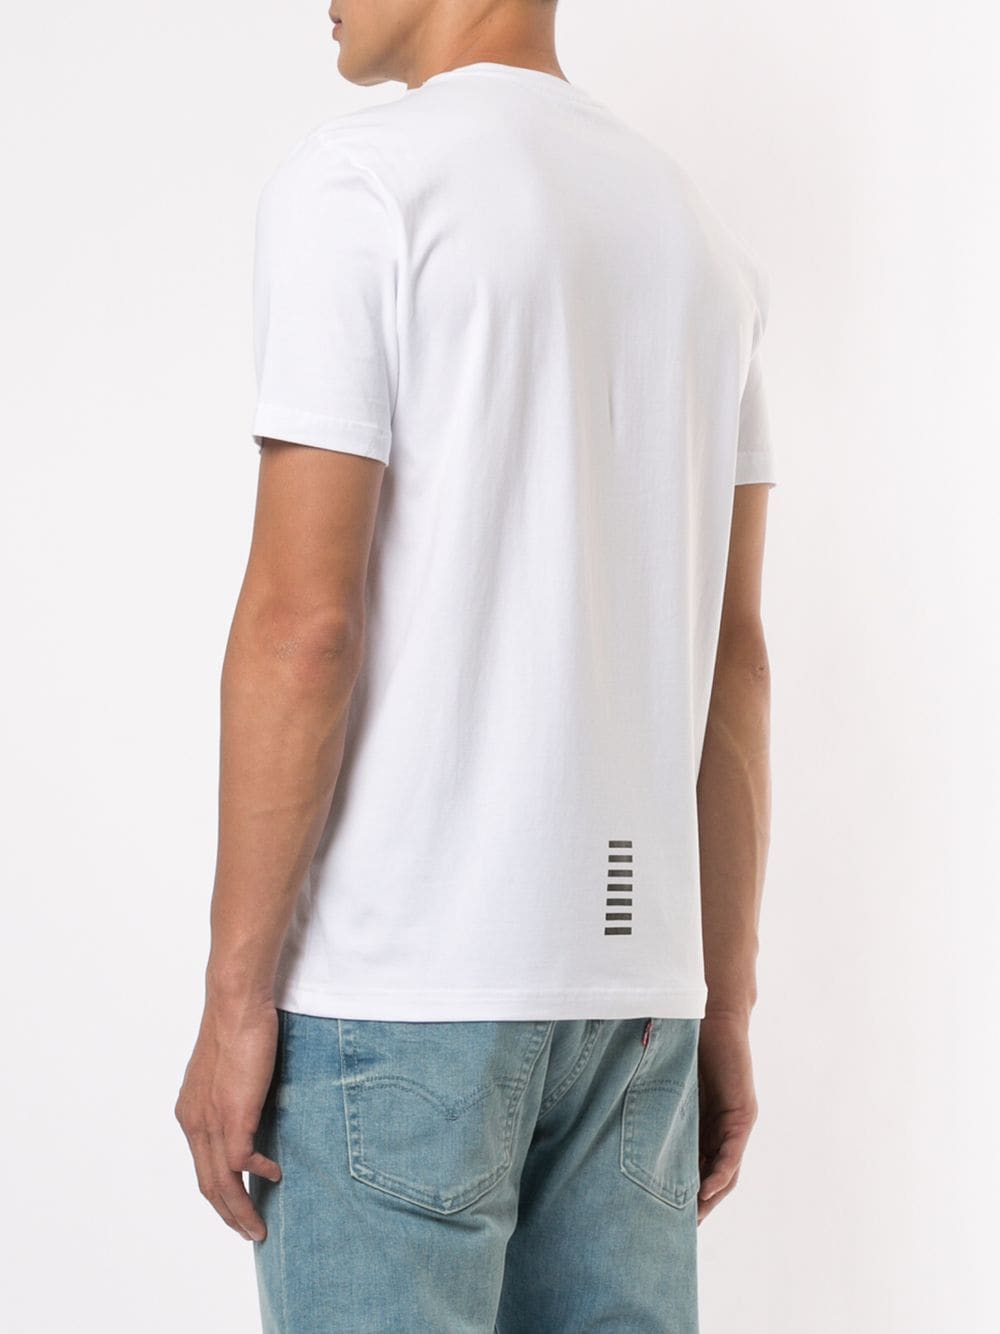 Shop Ea7 Emporio Armani v-neck T-shirt with Express Delivery - FARFETCH